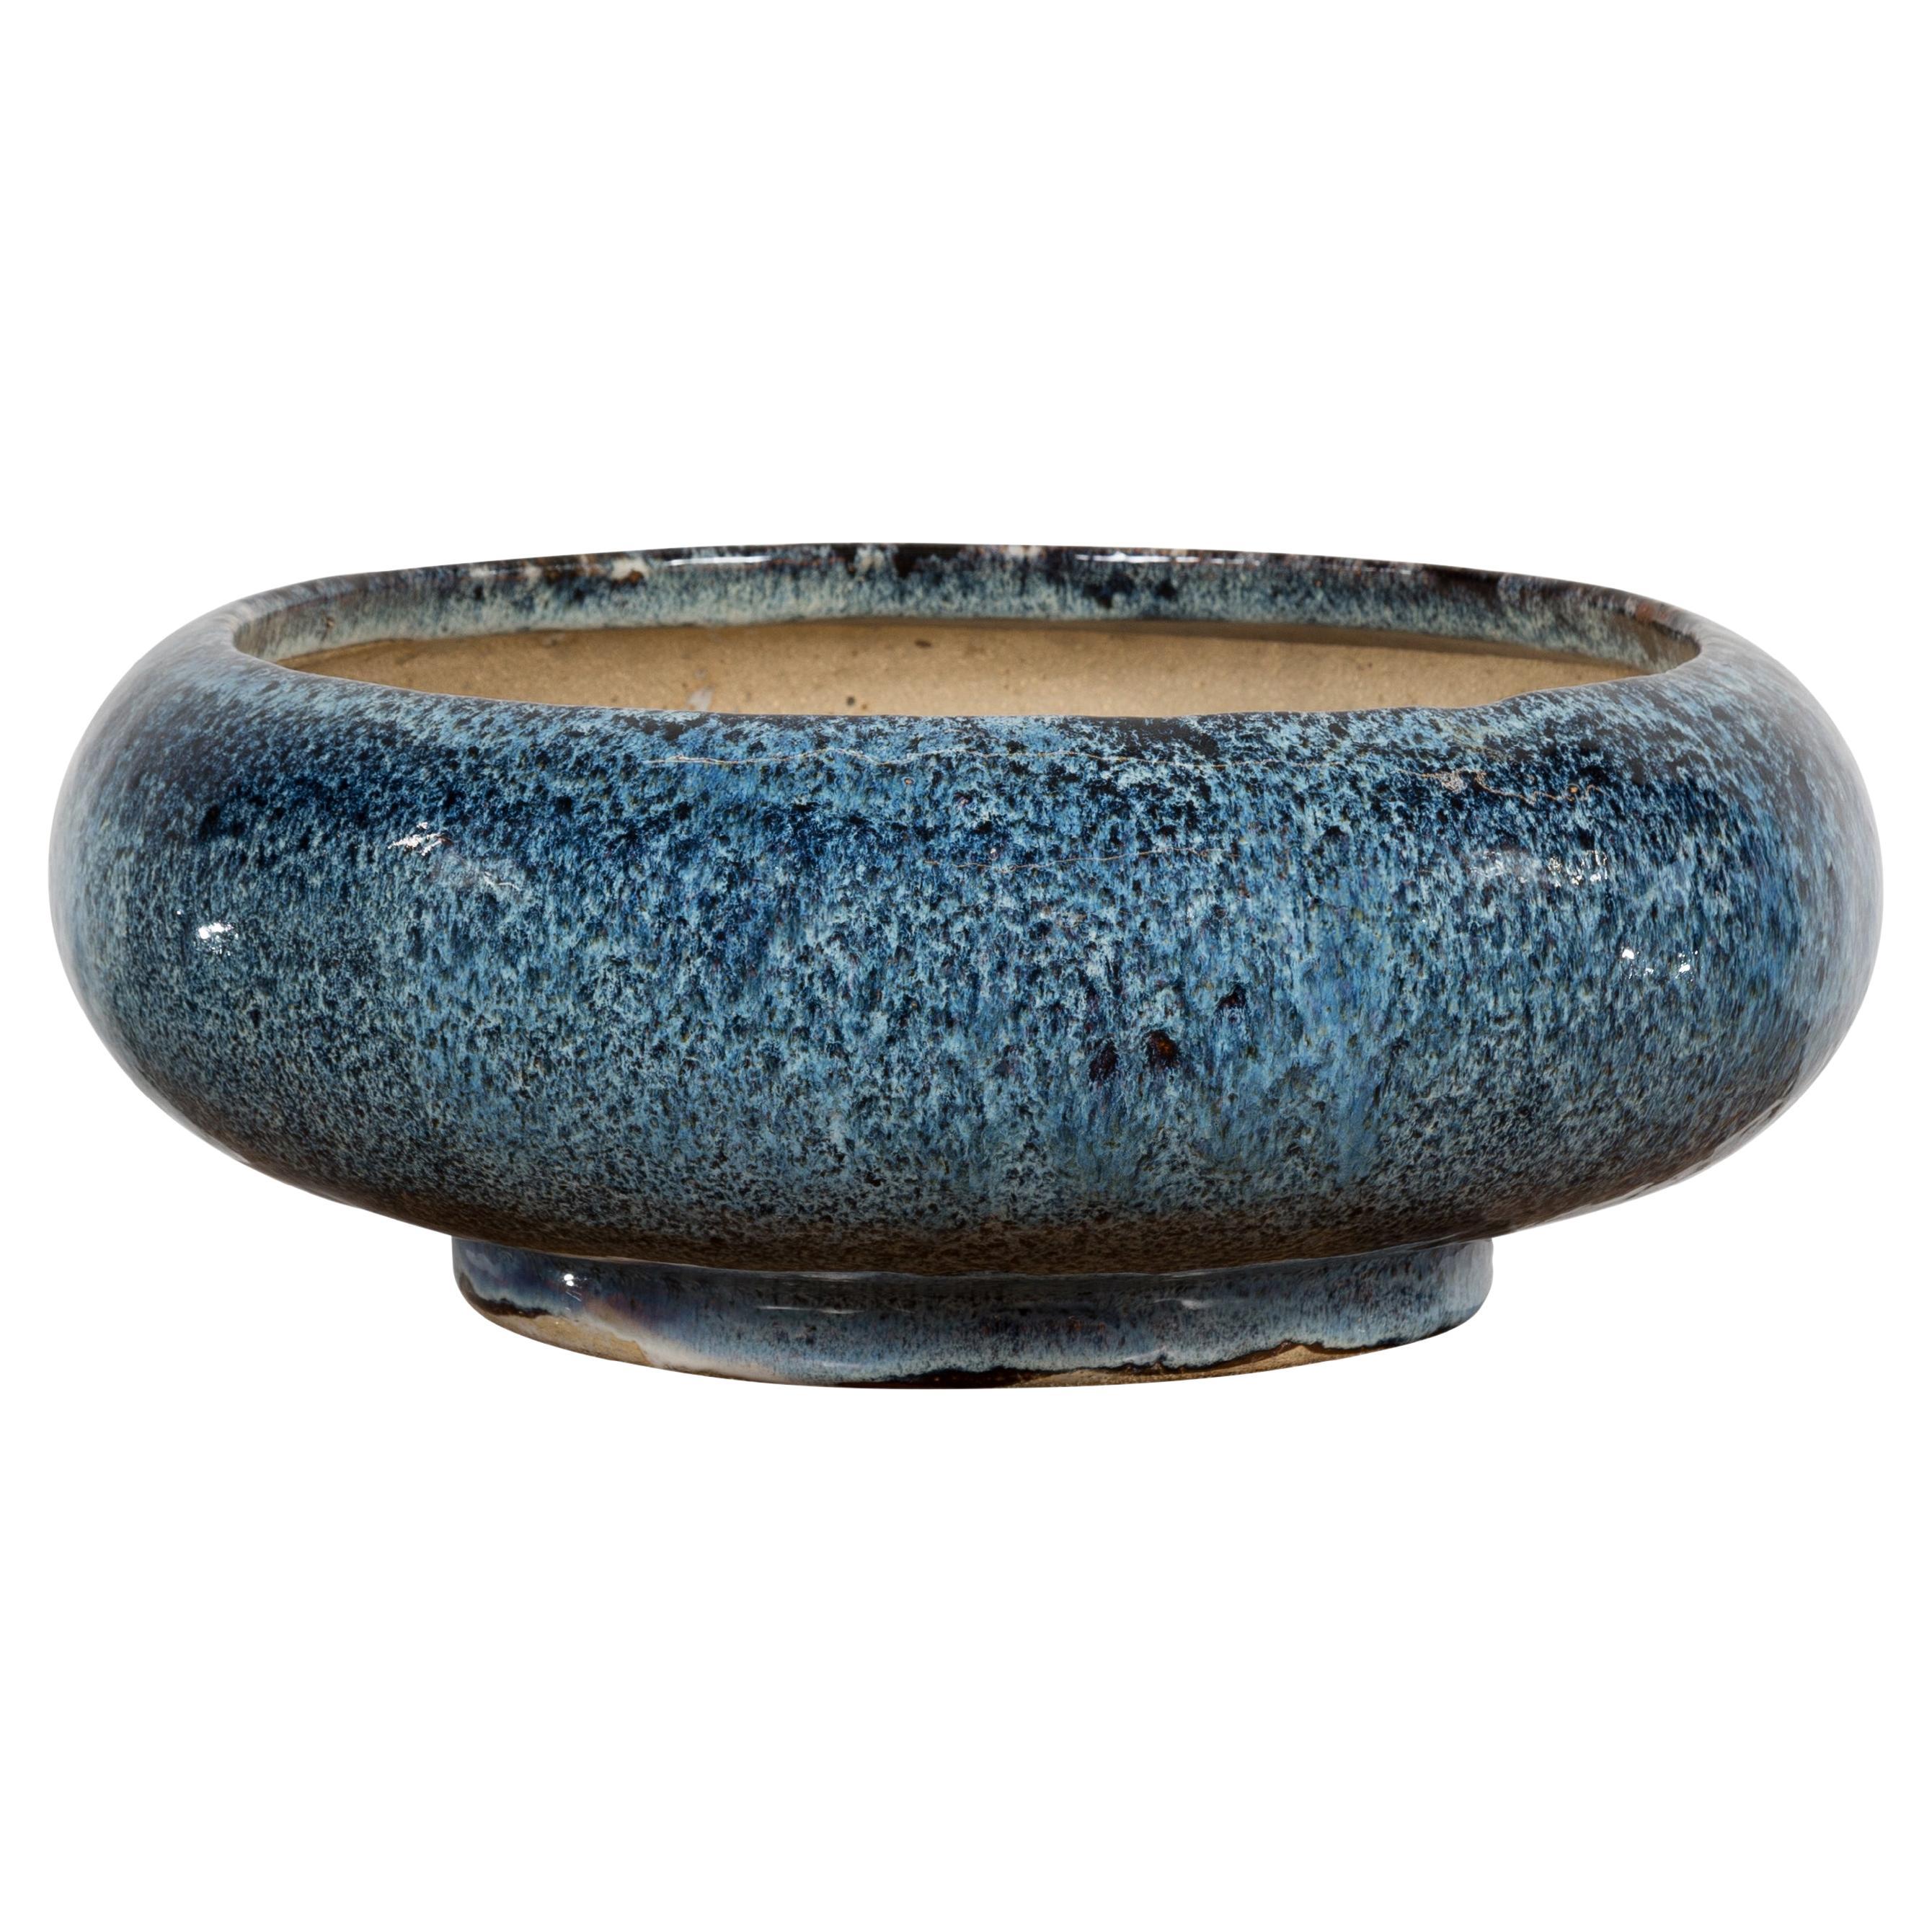 Chinese Vintage Blue Glaze Ceramic Planter For Sale